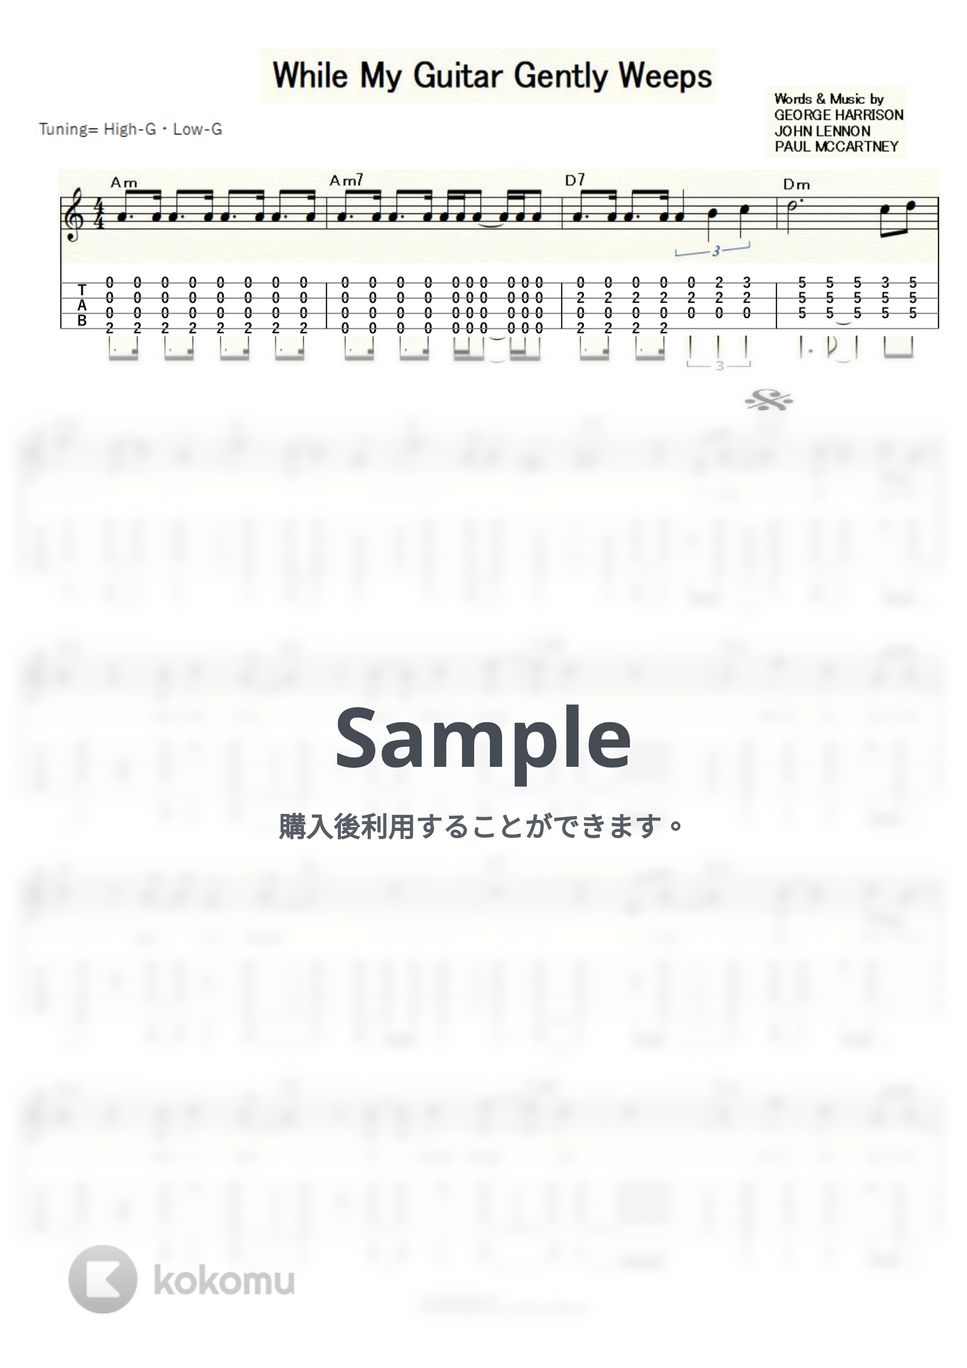 ＴＨＥ　ＢＥＡＴＬＥＳ - While My Guitar Gently Weeps (ｳｸﾚﾚｿﾛ/High-G・Low-G/中級) by ukulelepapa